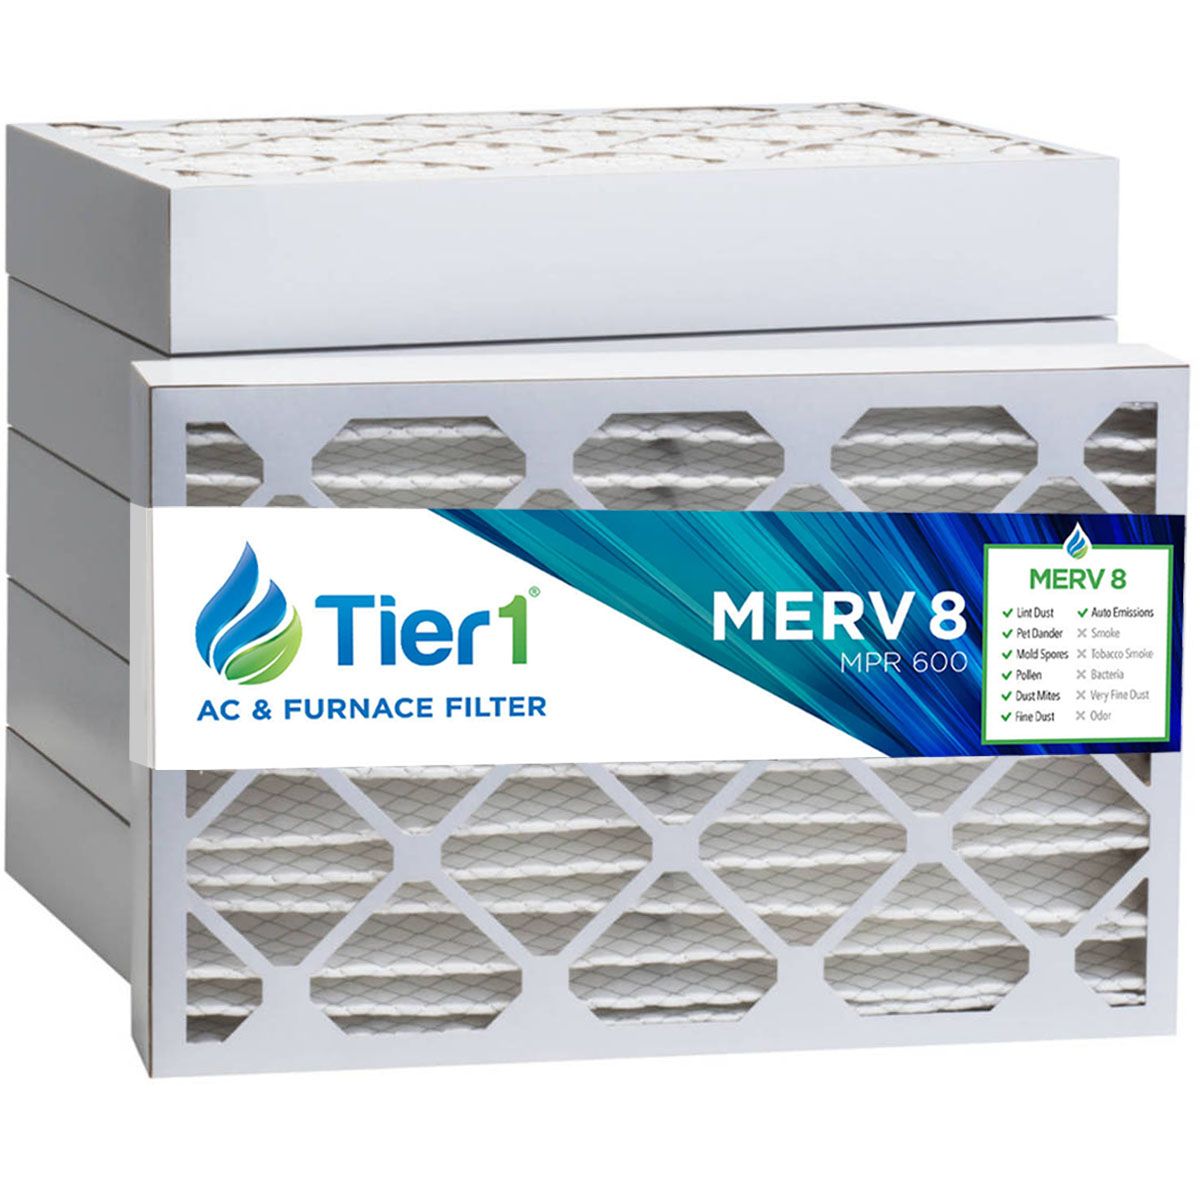 16x25x4 Merv 8 Universal Air Filter By Tier1